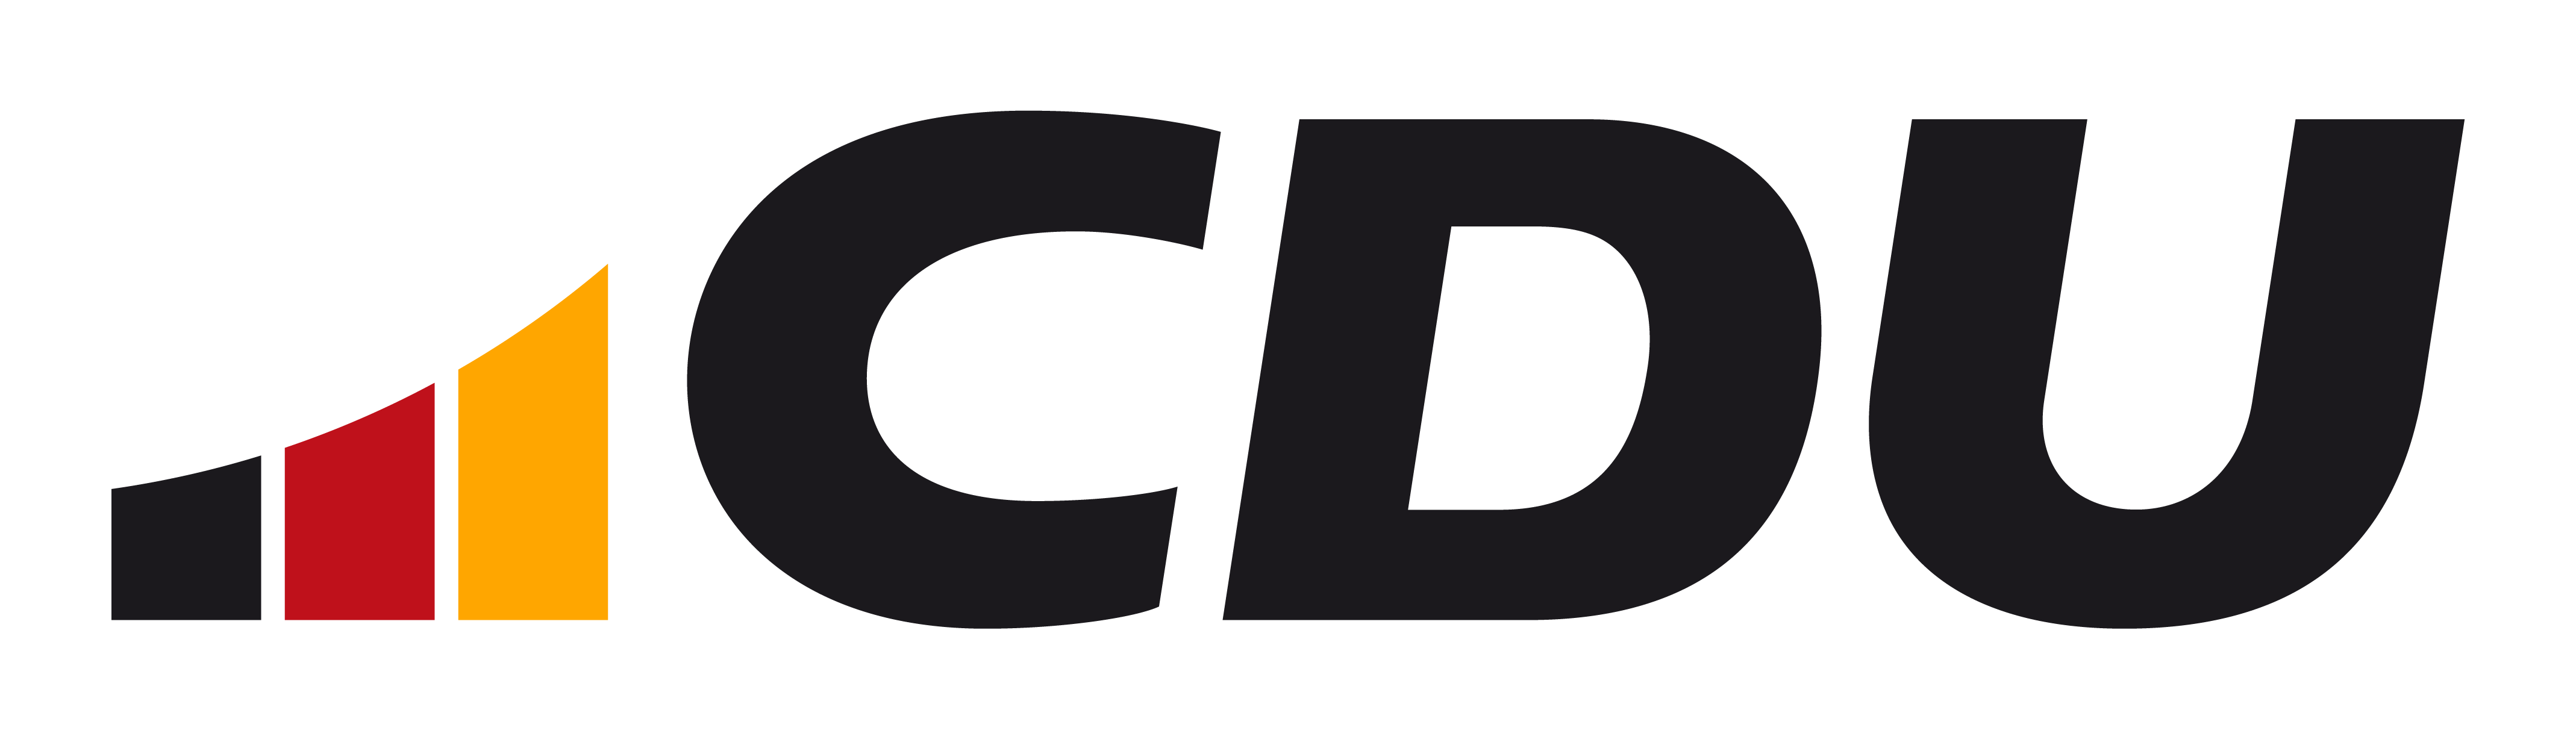 cdu-linkenheim-hochstetten logo